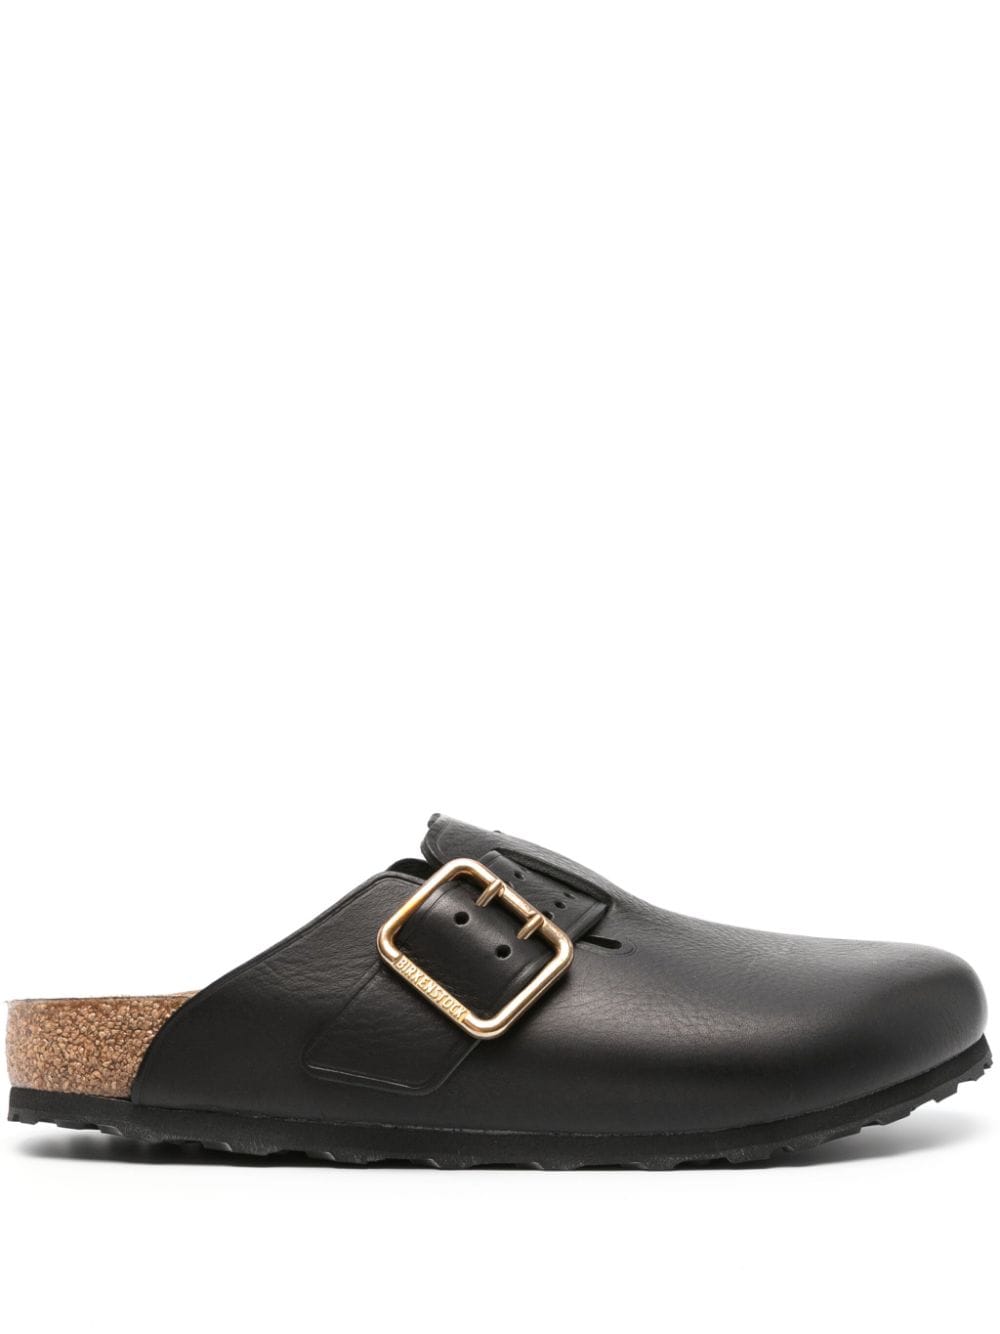 Birkenstock Boston Bold leather slippers - Black von Birkenstock